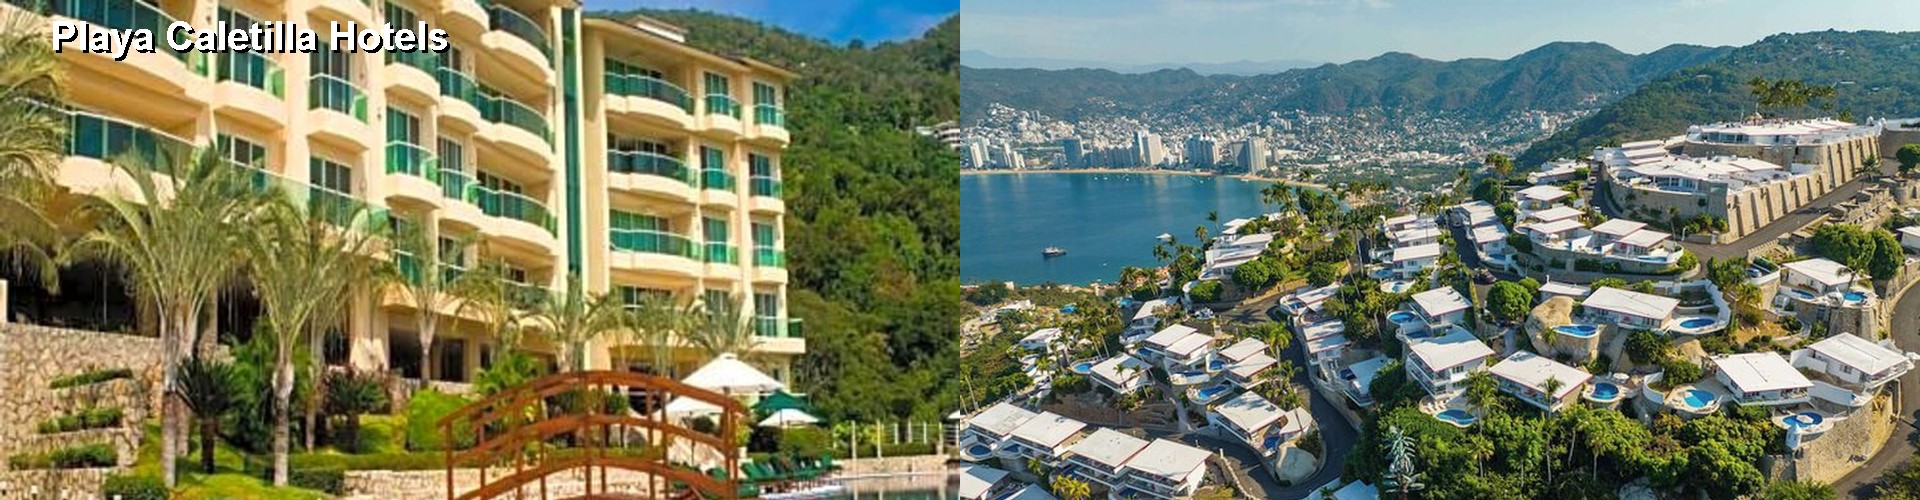 5 Best Hotels near Playa Caletilla